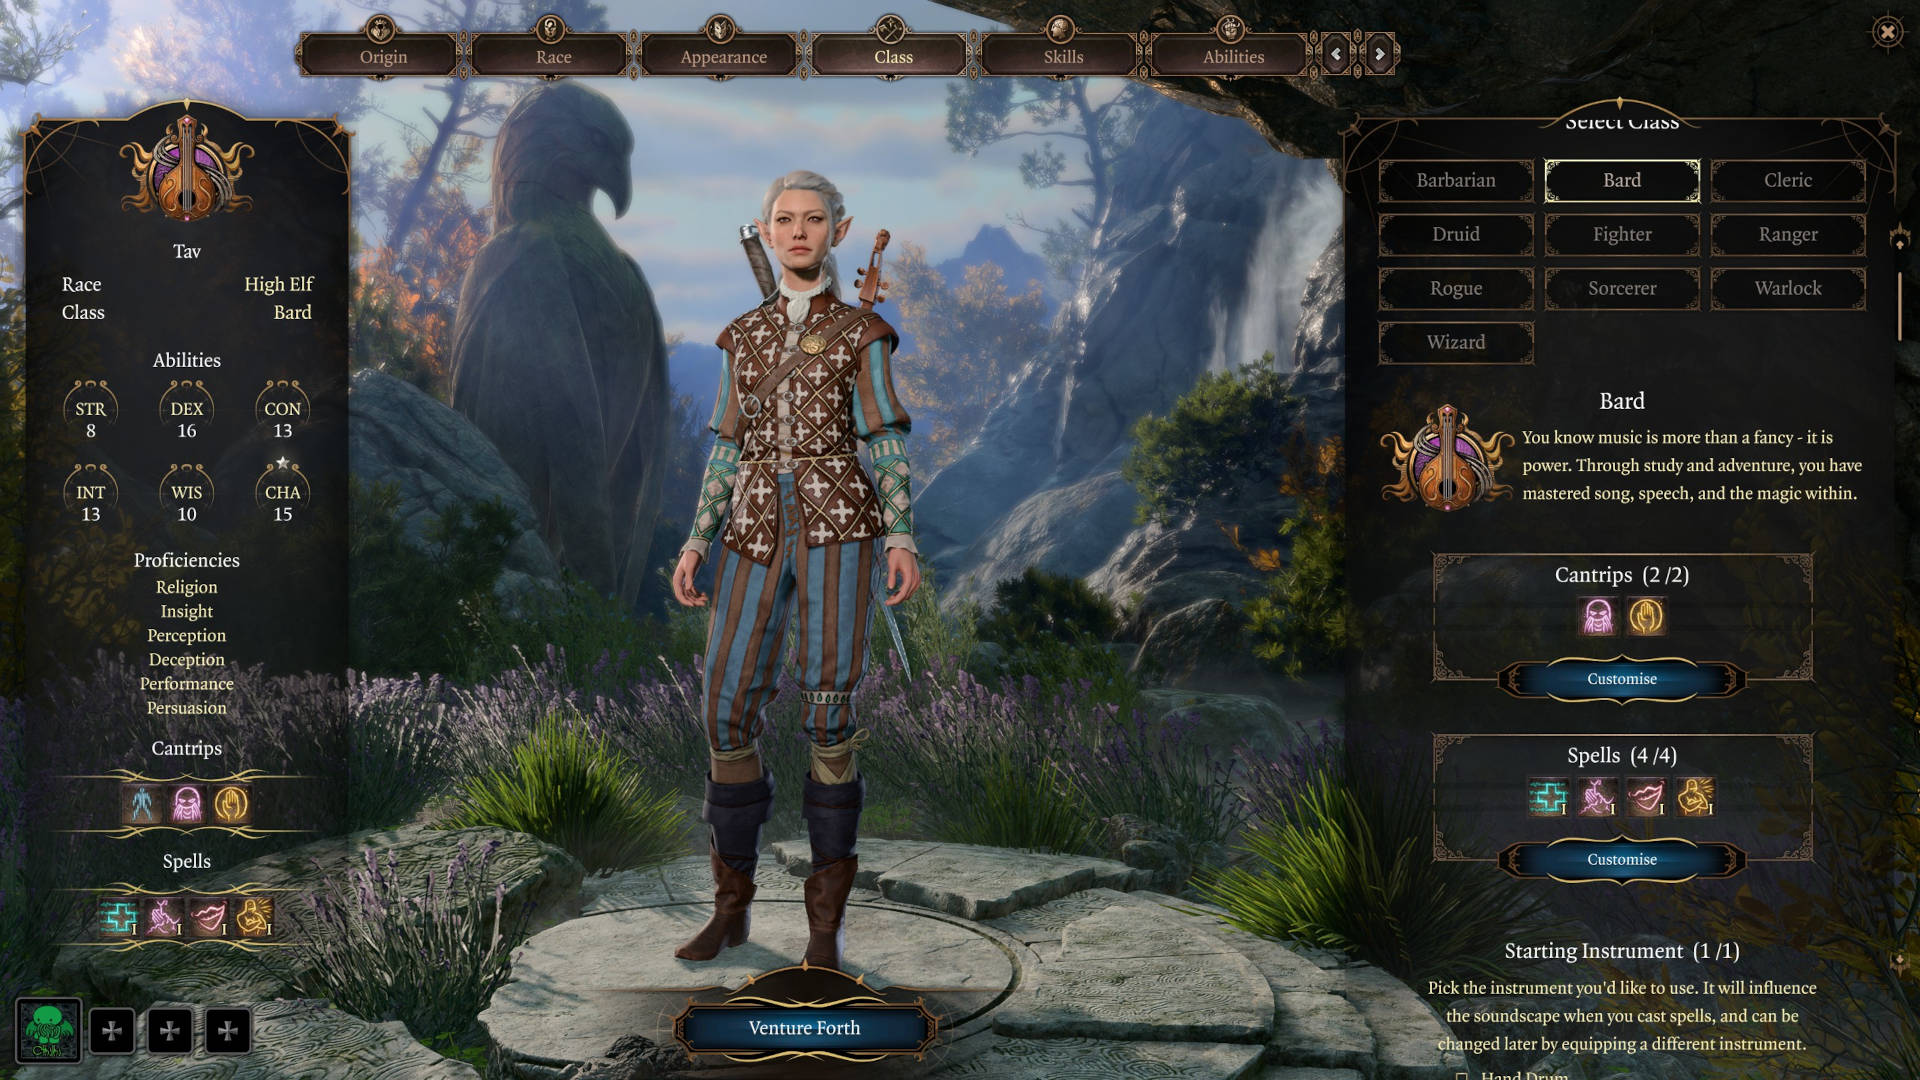 Baldur's Gate 3 classes: a High-Elf Bard on the character creation screen.